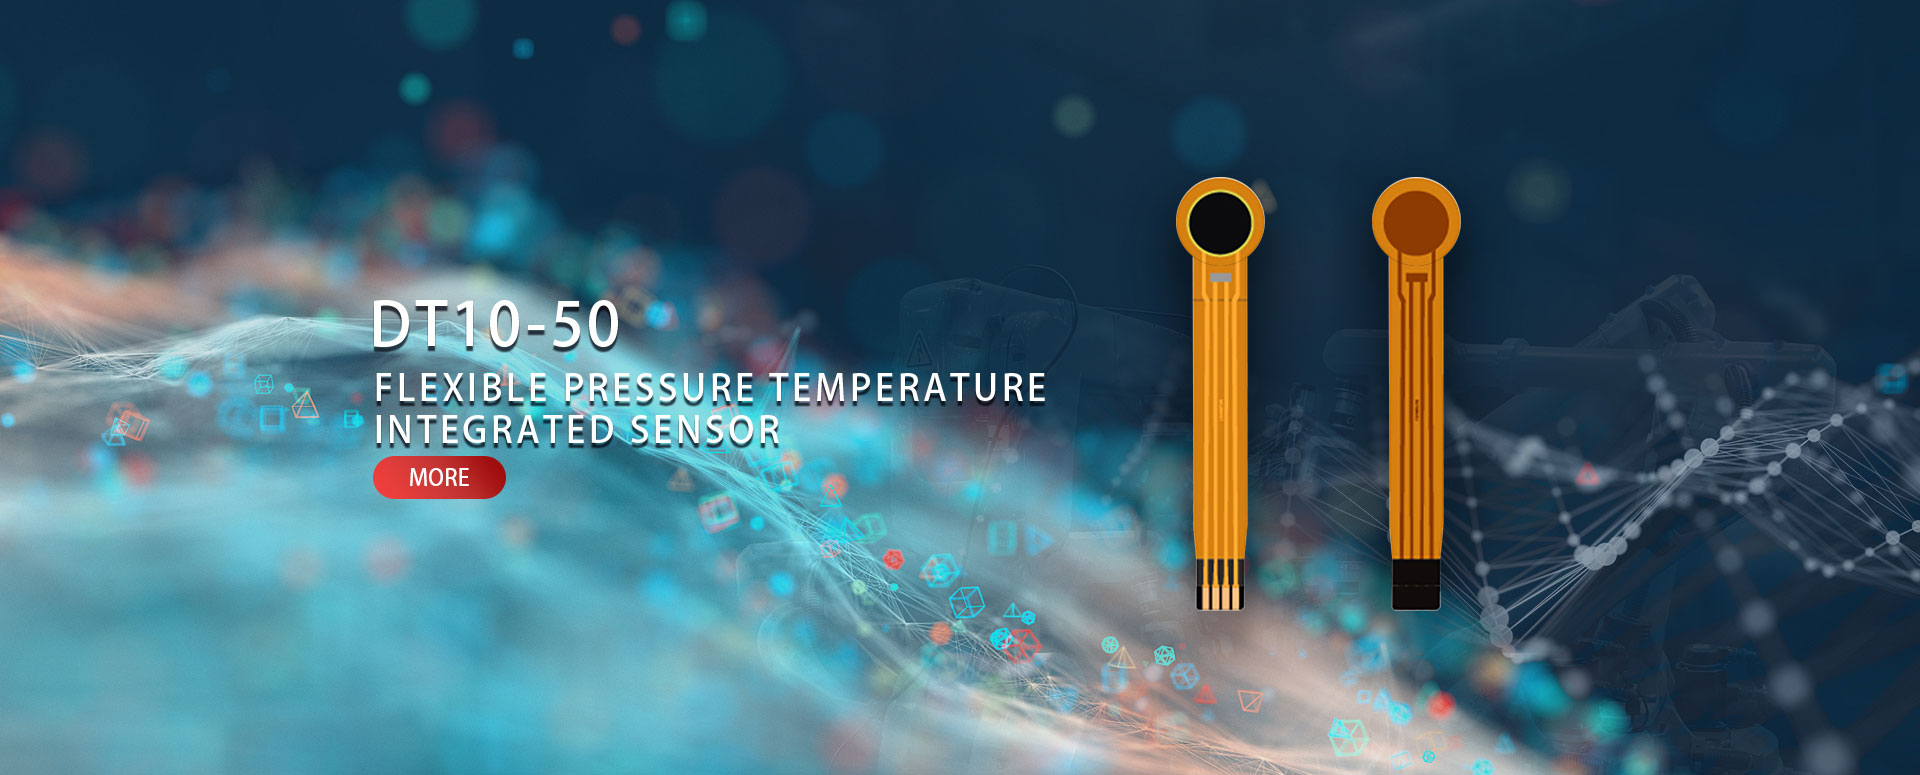 DT10-50 Flexible Pressure Sensor